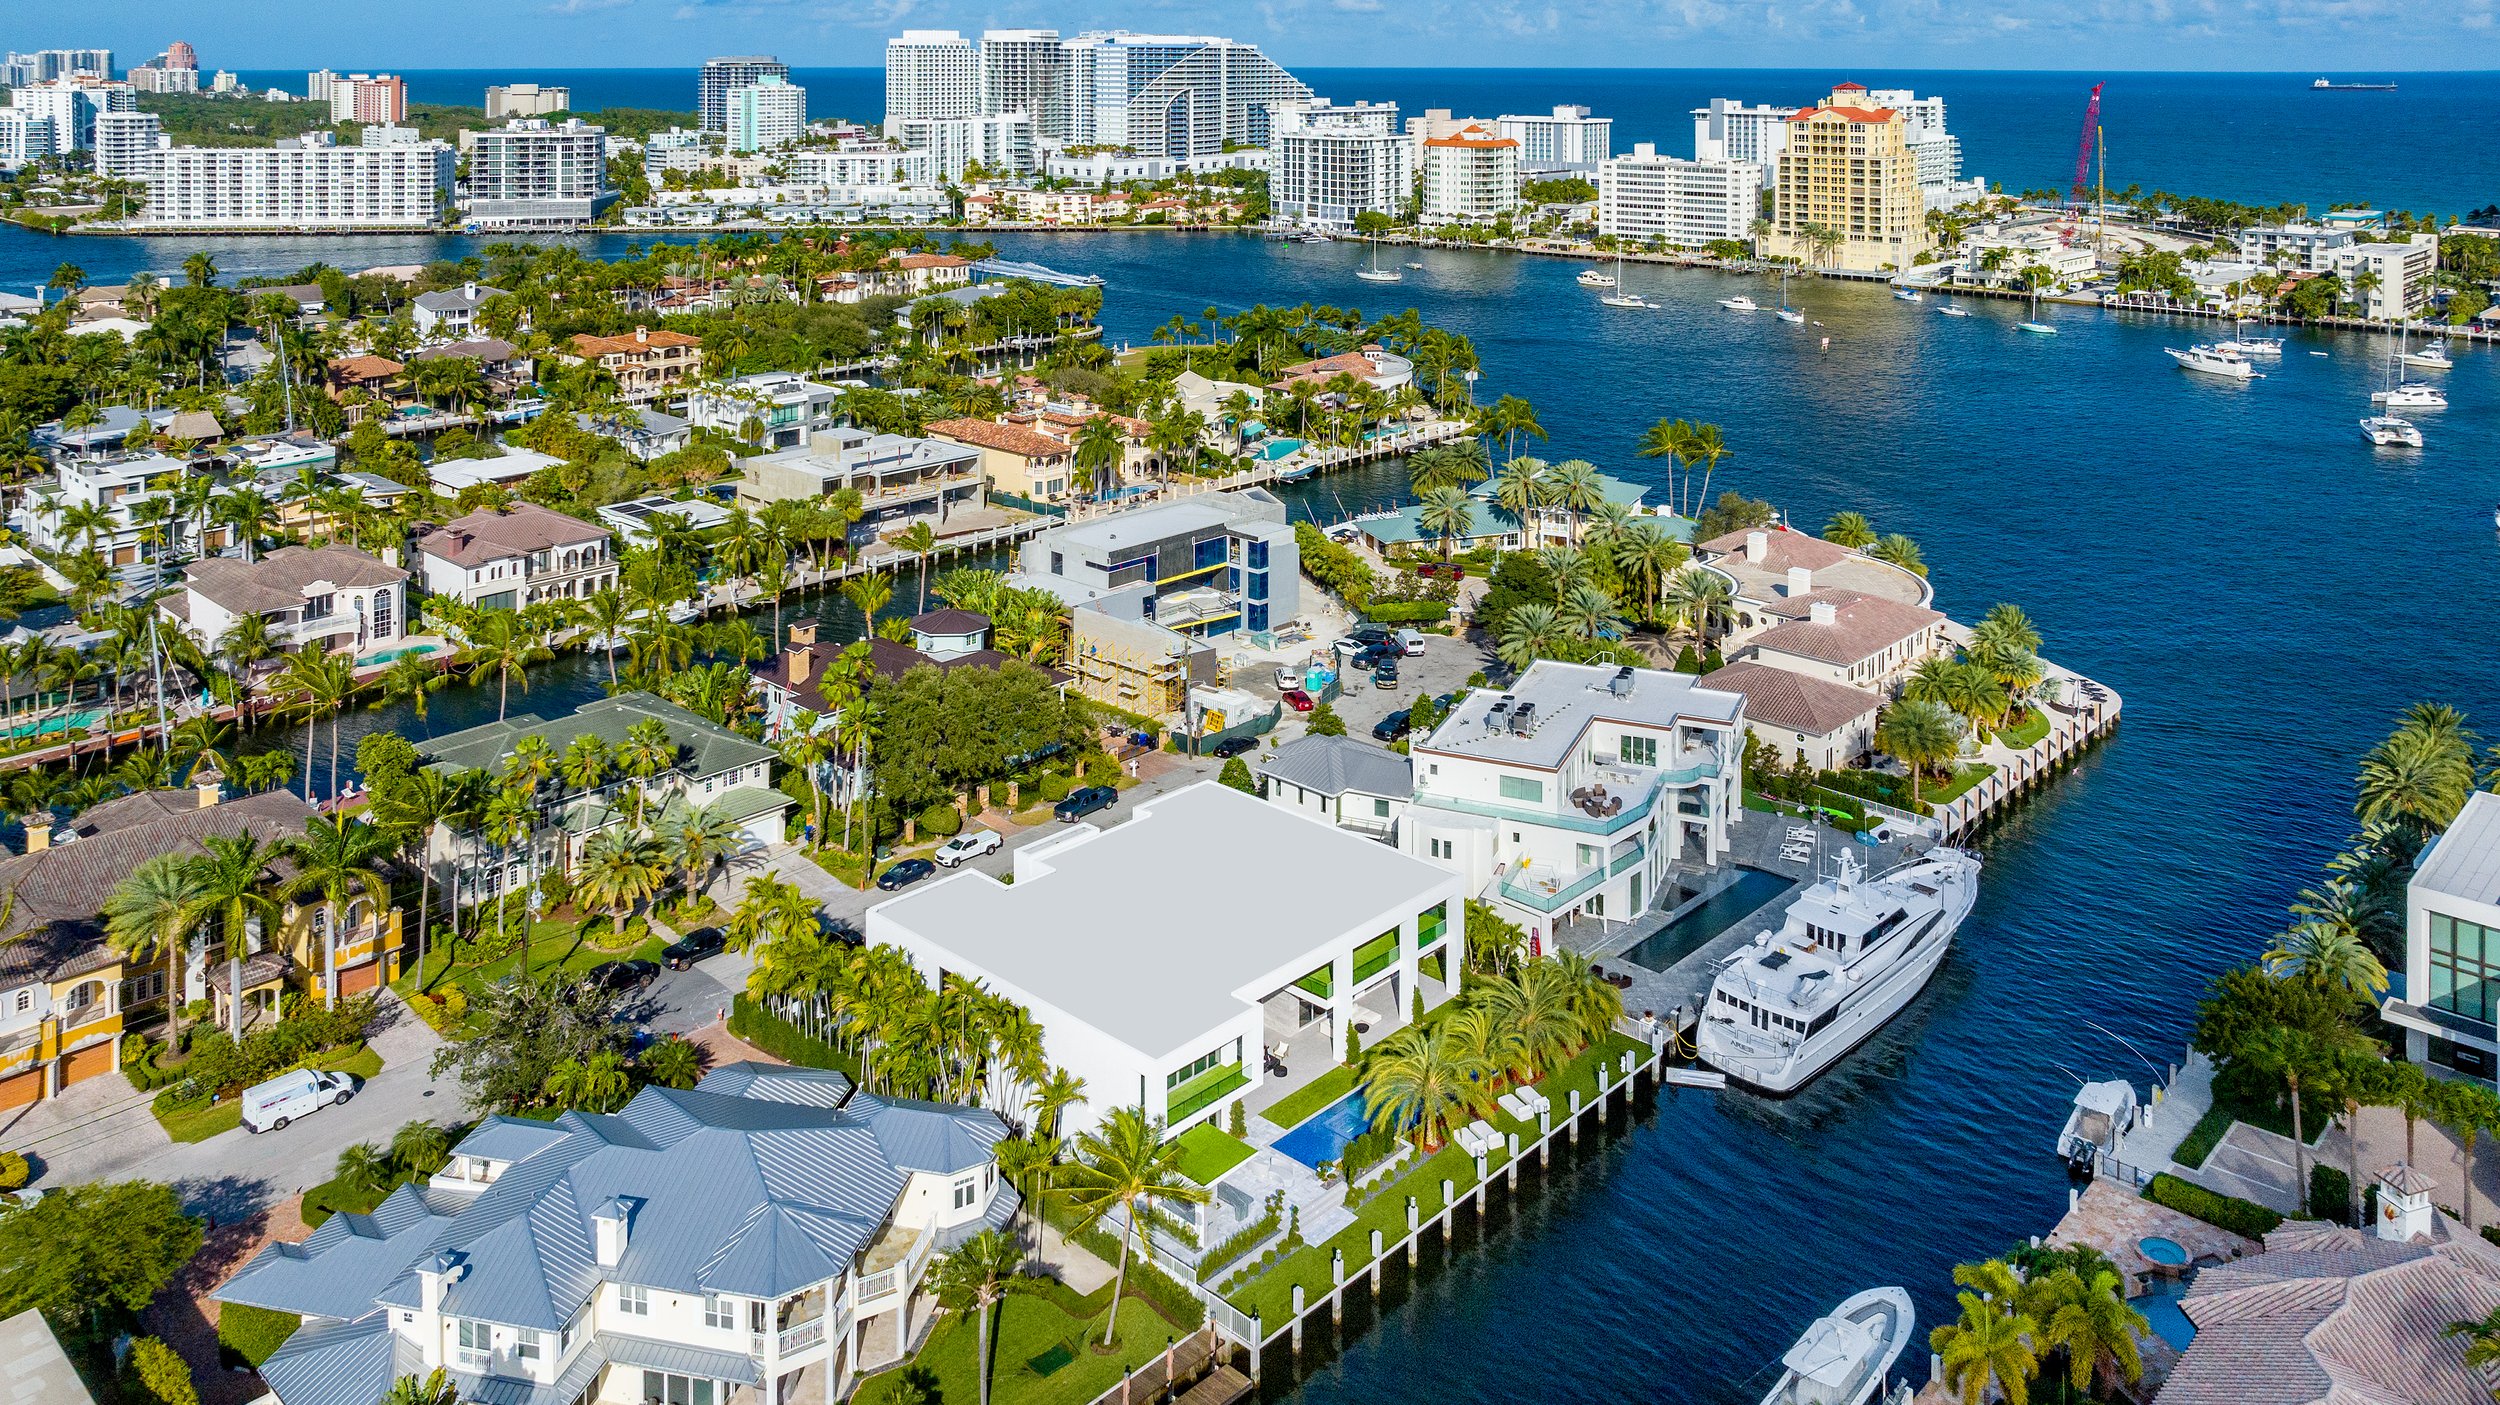 Fort Lauderdale Waterfront Sells For Las Olas Isle Record $14.75 Million 5.jpg